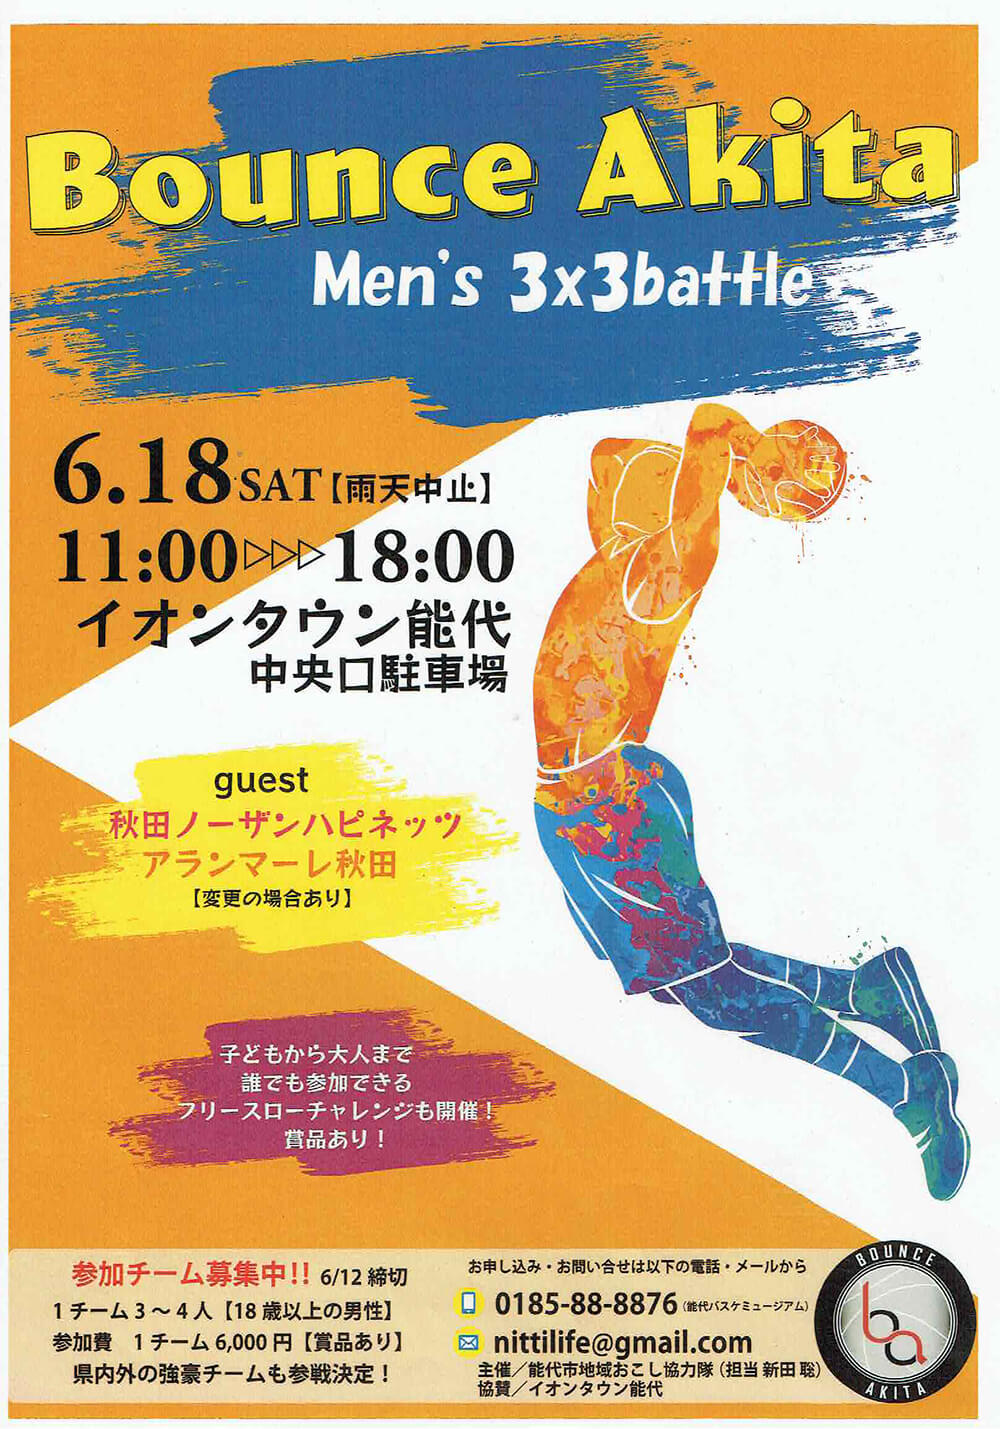 Bounce Akita Men's 3x3battle